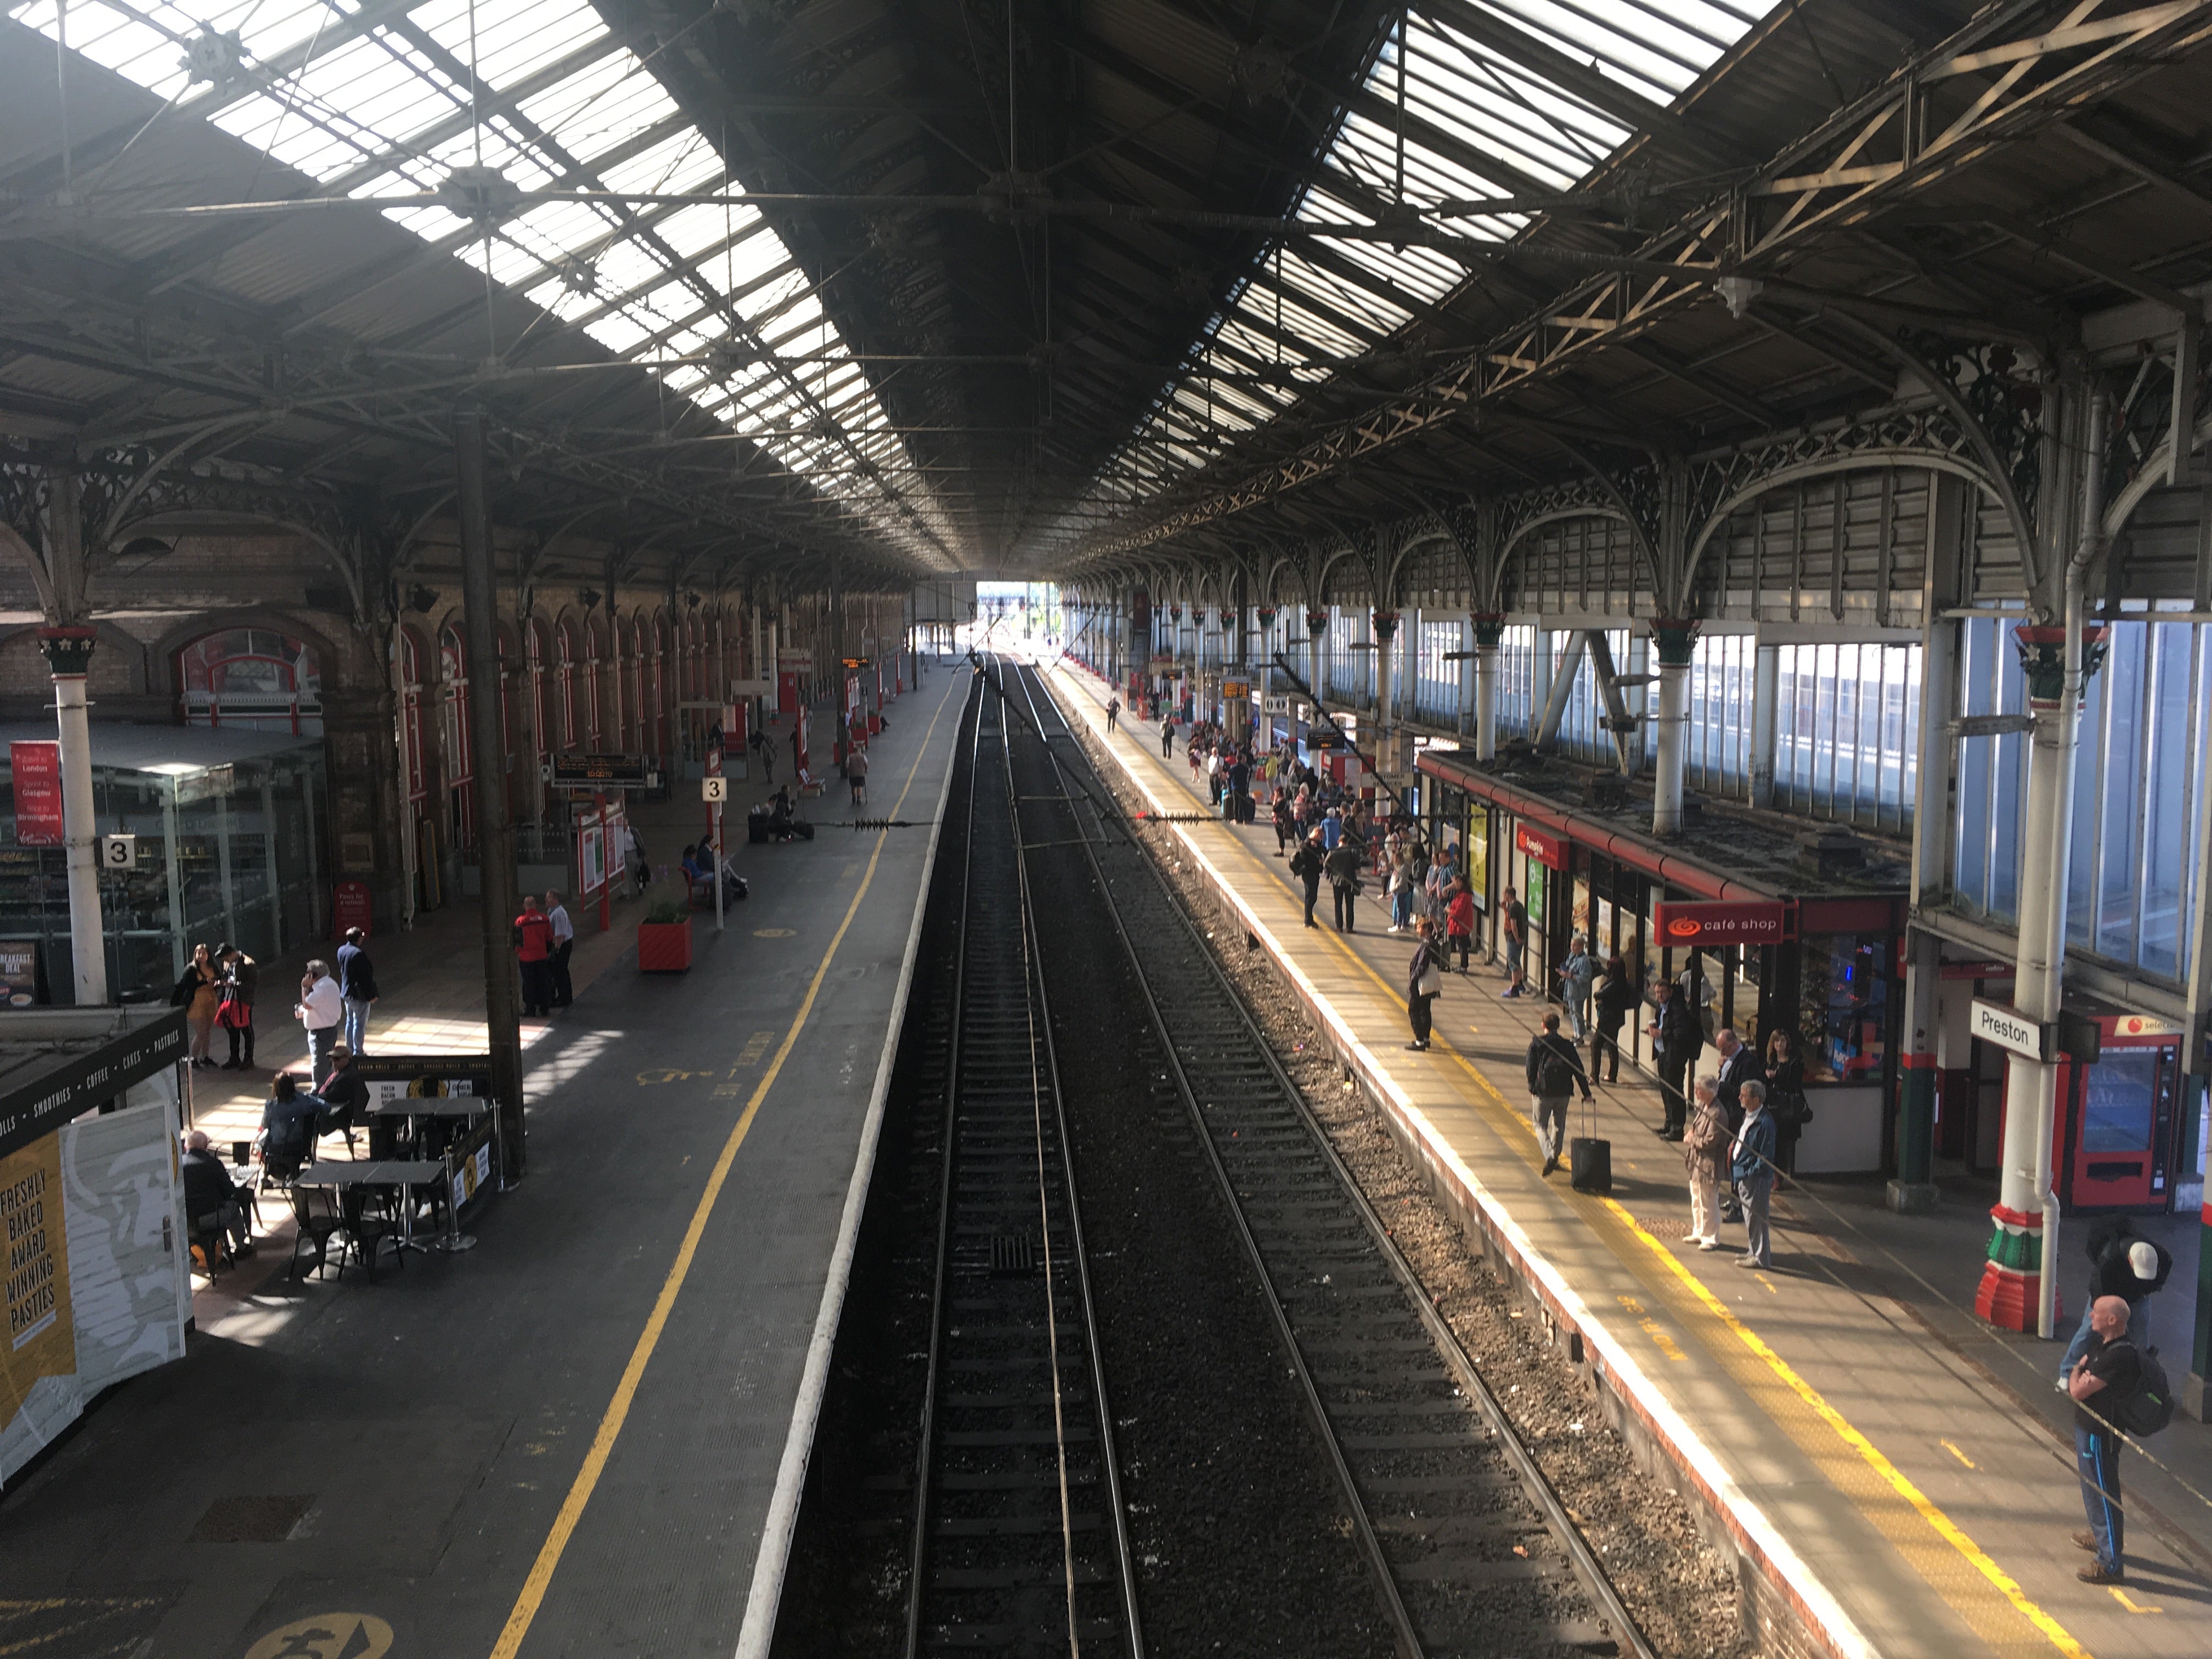 Waiting game: Crewe station in Cheshire